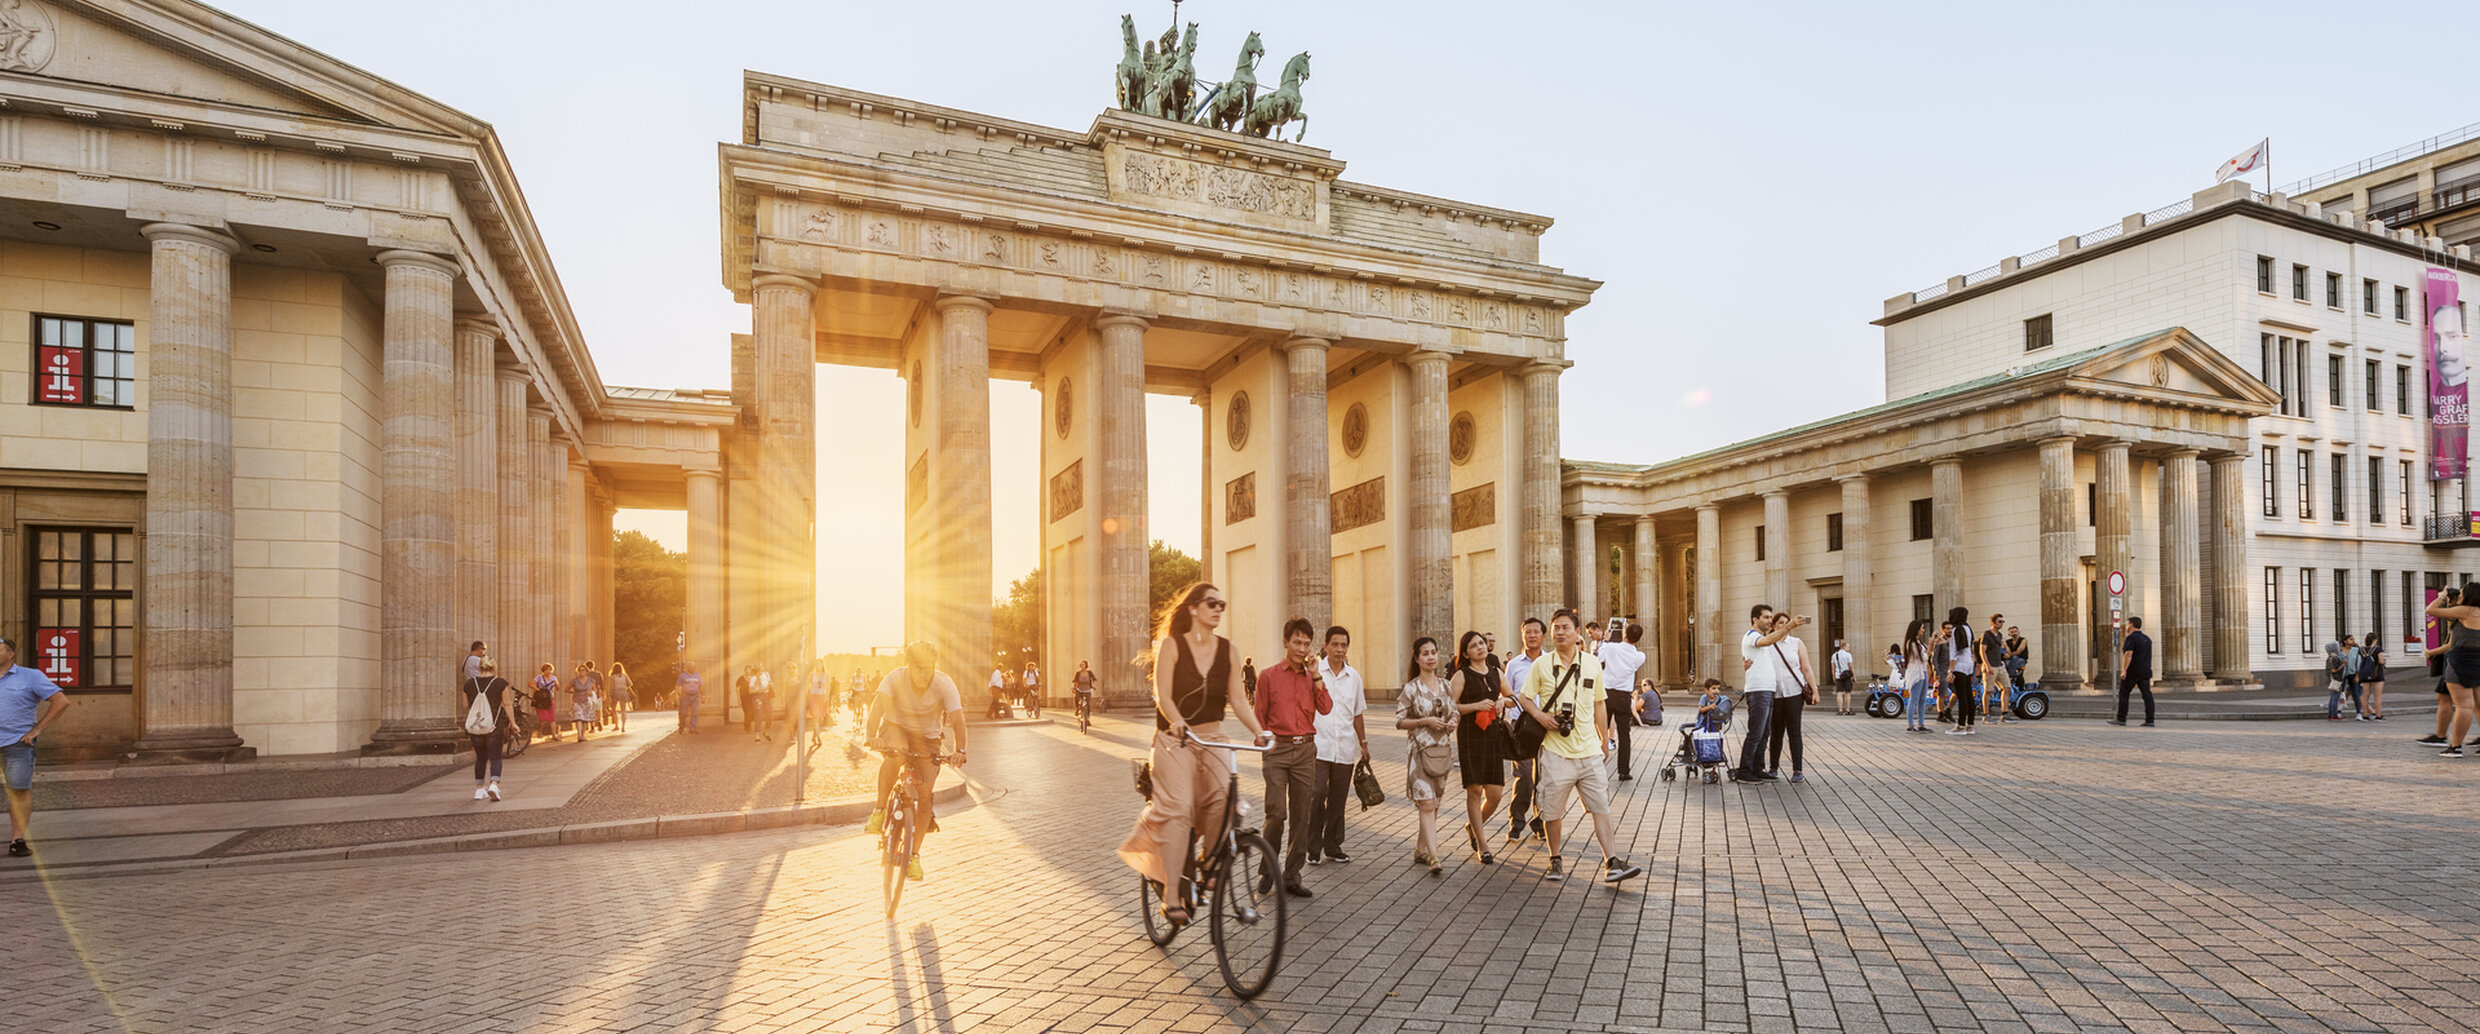 Brandenburg Gate in Berlin, an example of Greek revival architecture